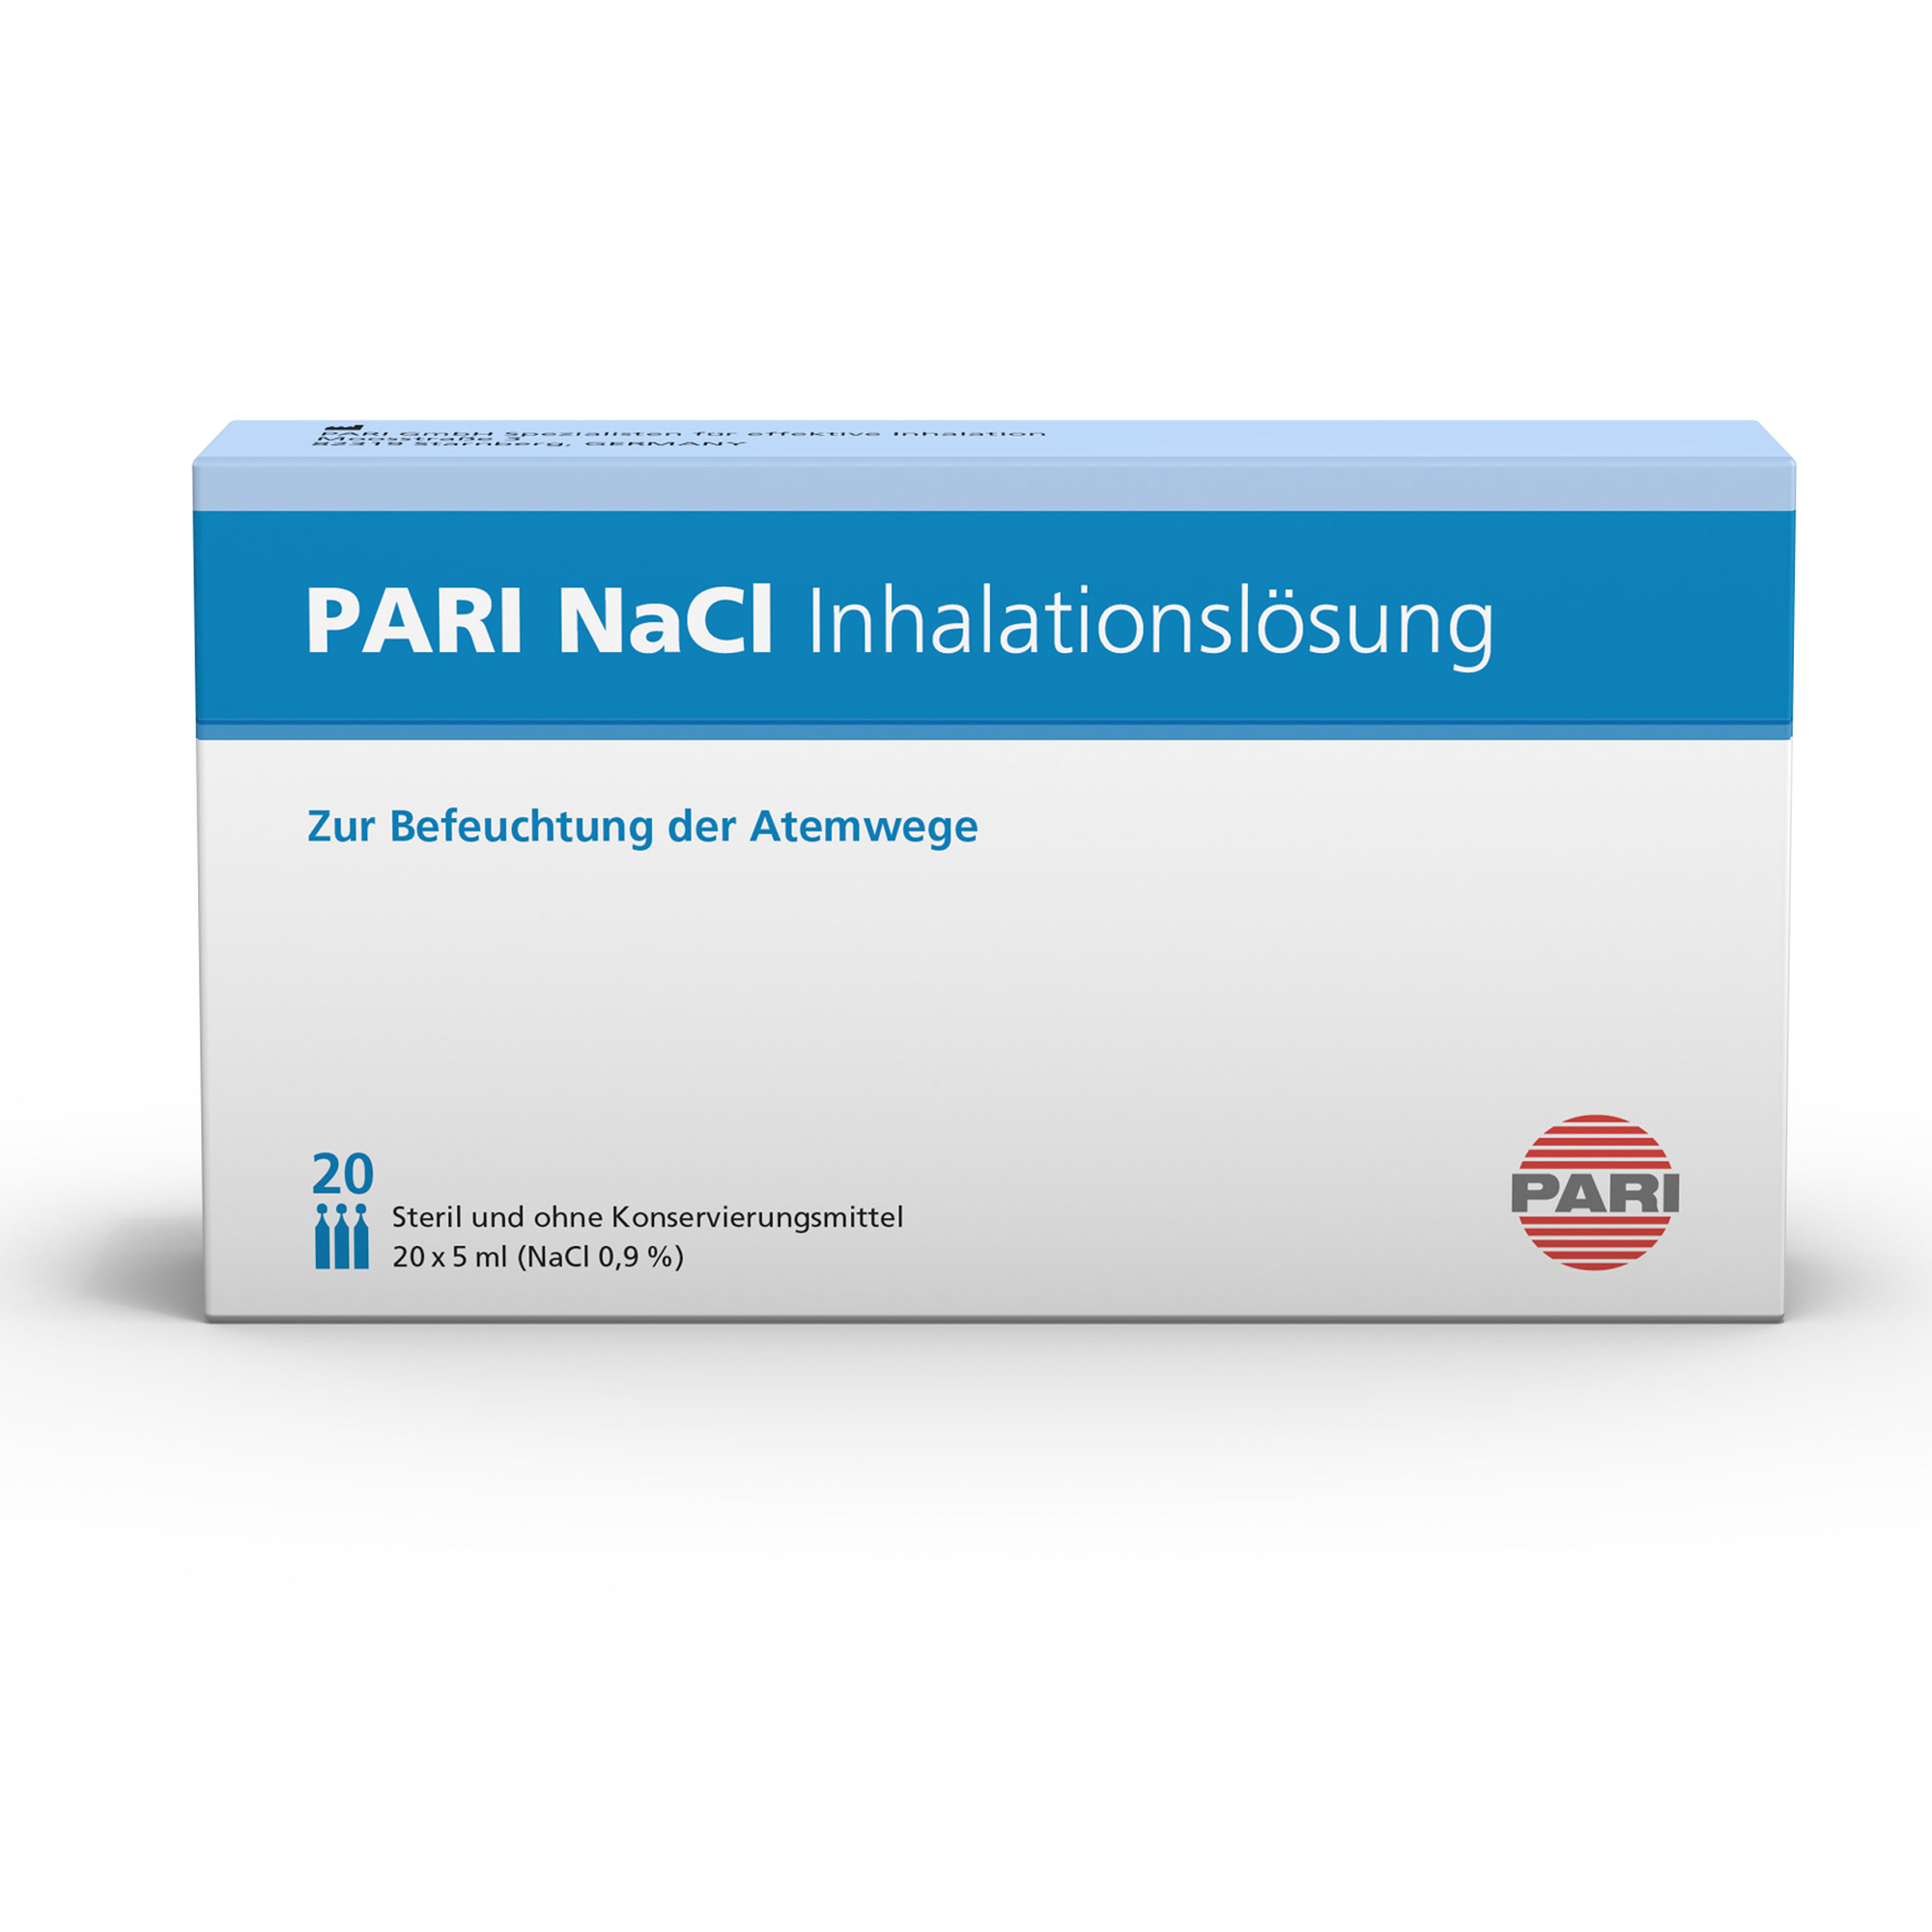 PARI NaCl Inhalationslösung 0,9 % Isotone Salzlösung Steril 5 ml